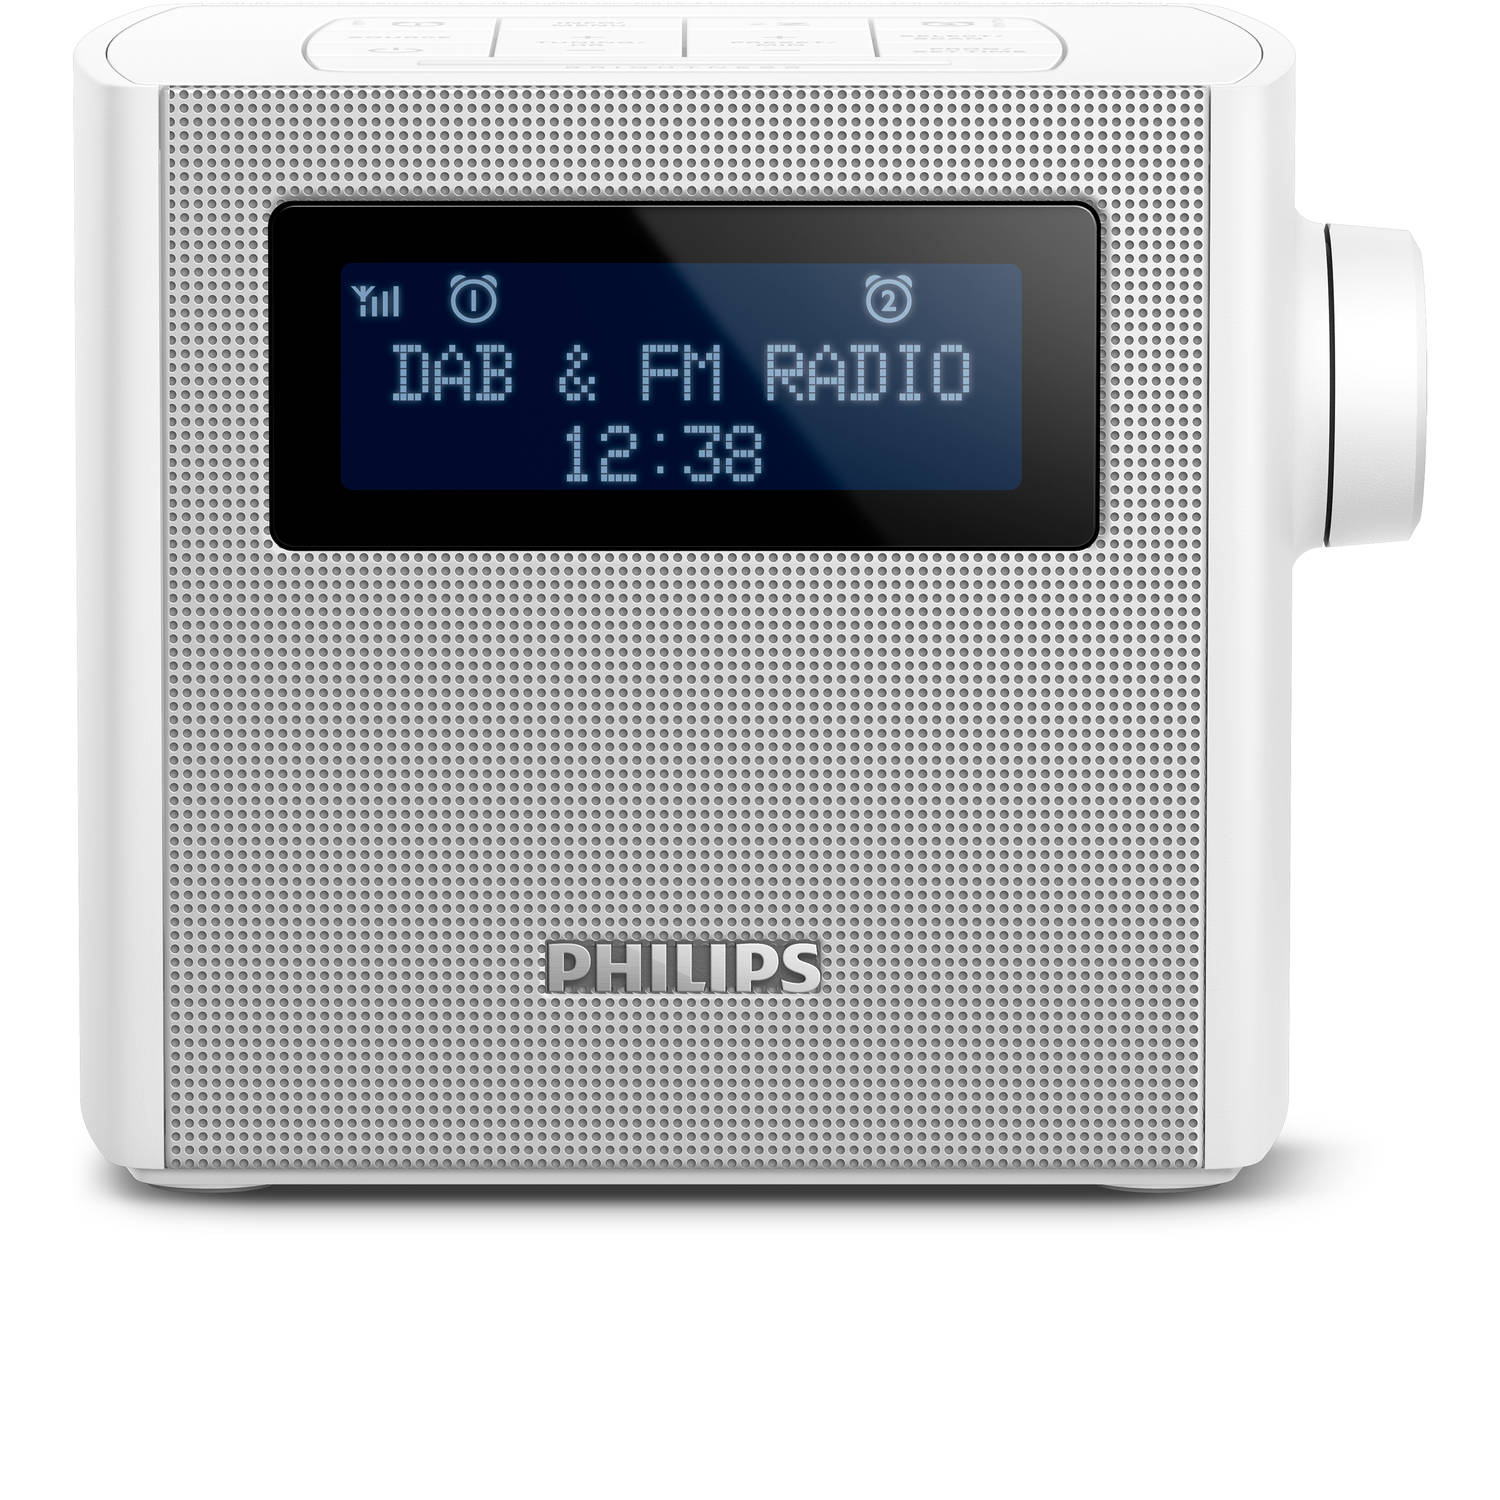 Acht Bedienen vertraging Philips wekkerradio AJB4300W/12 - wit | Blokker